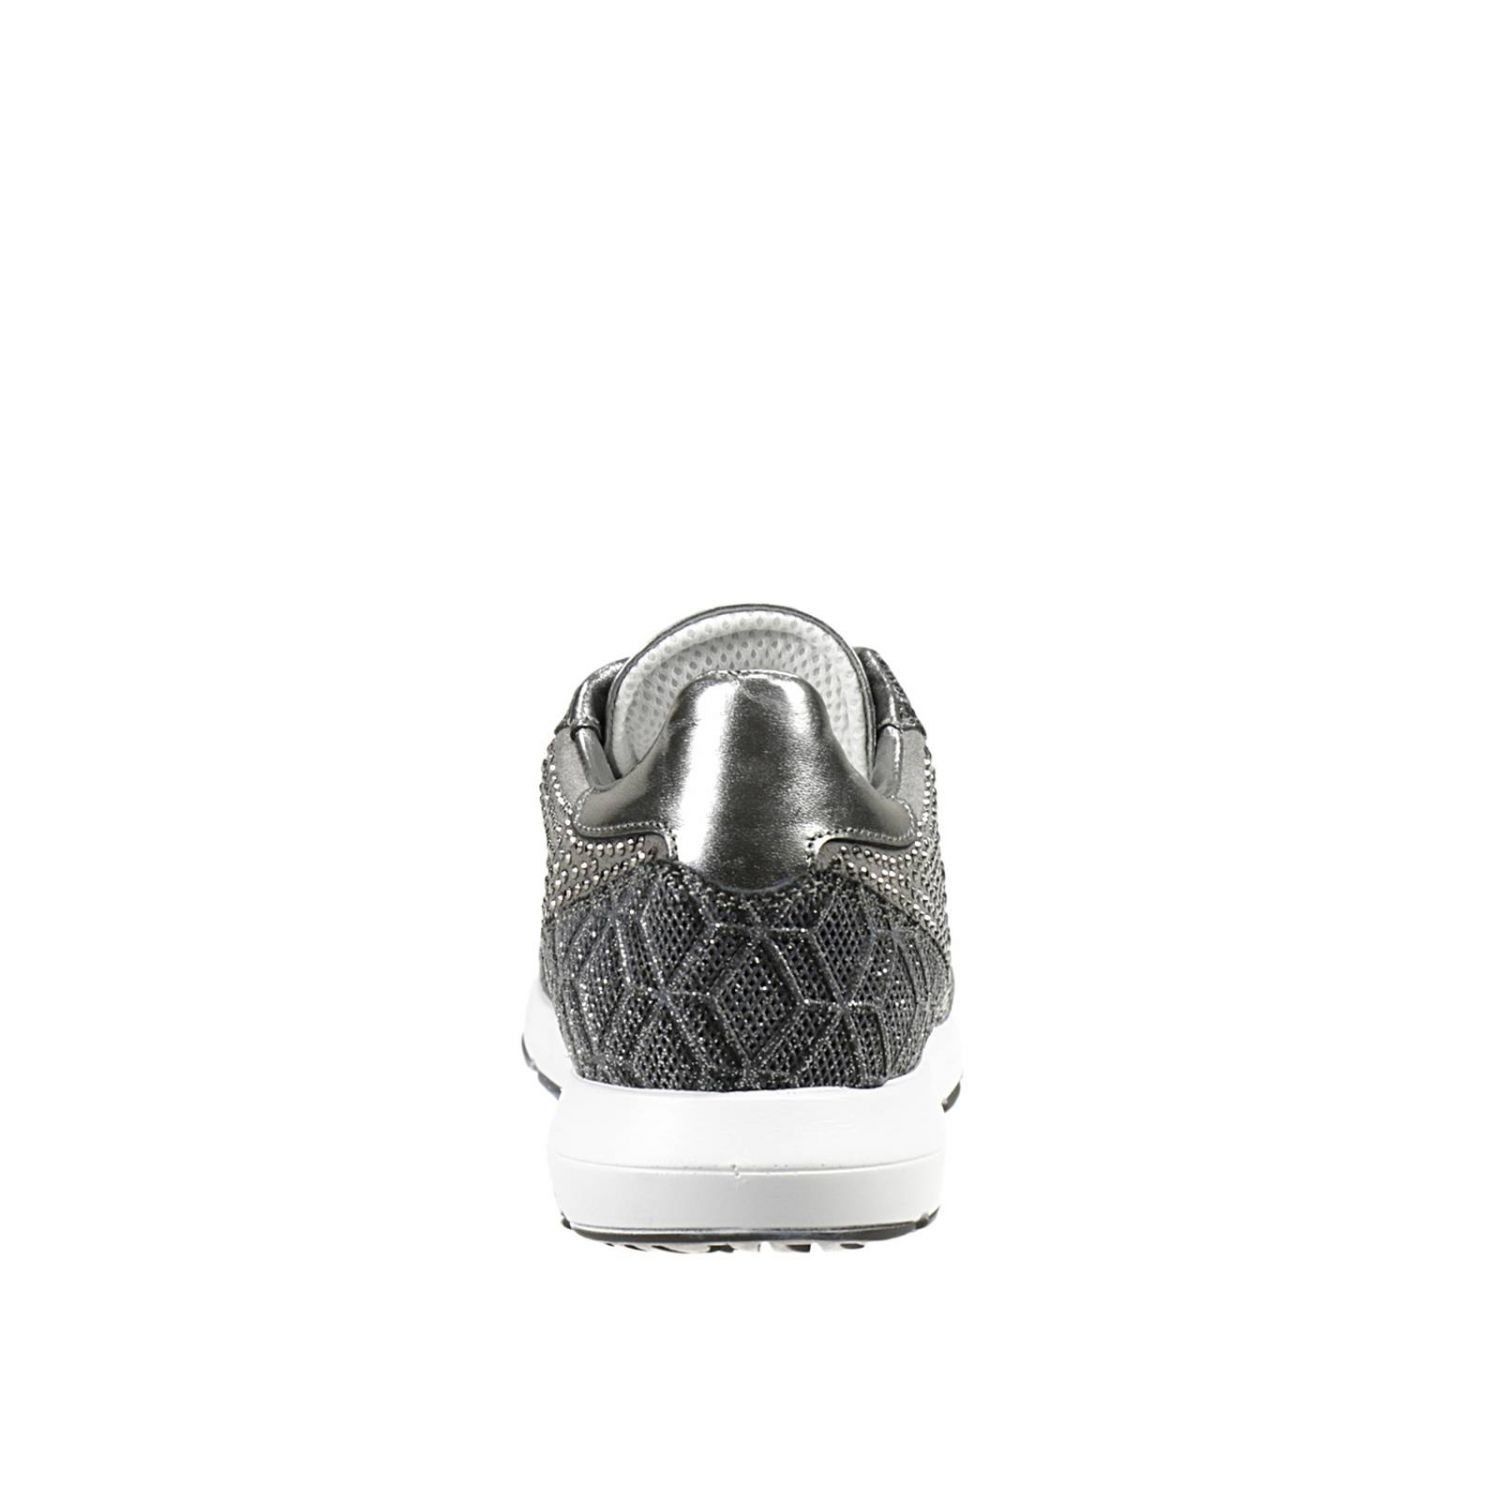 John richmond Sneakers Leather in Gray | Lyst